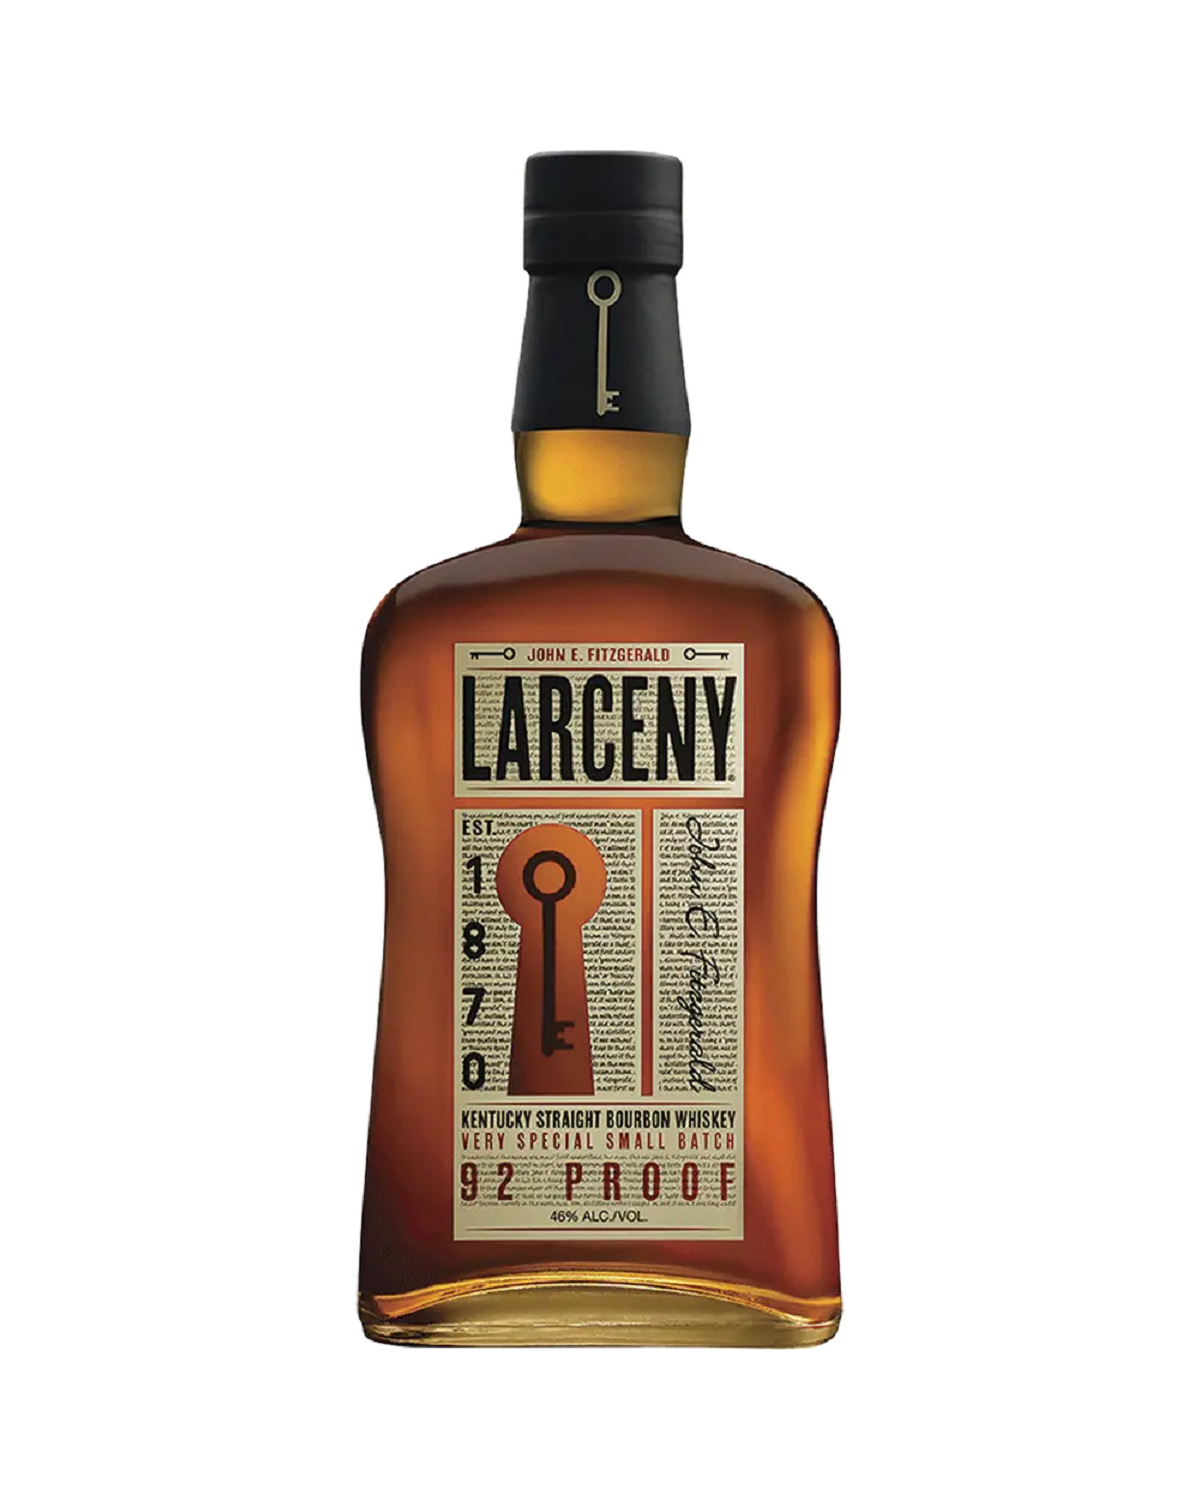 Larceny Bourbon 1.75L